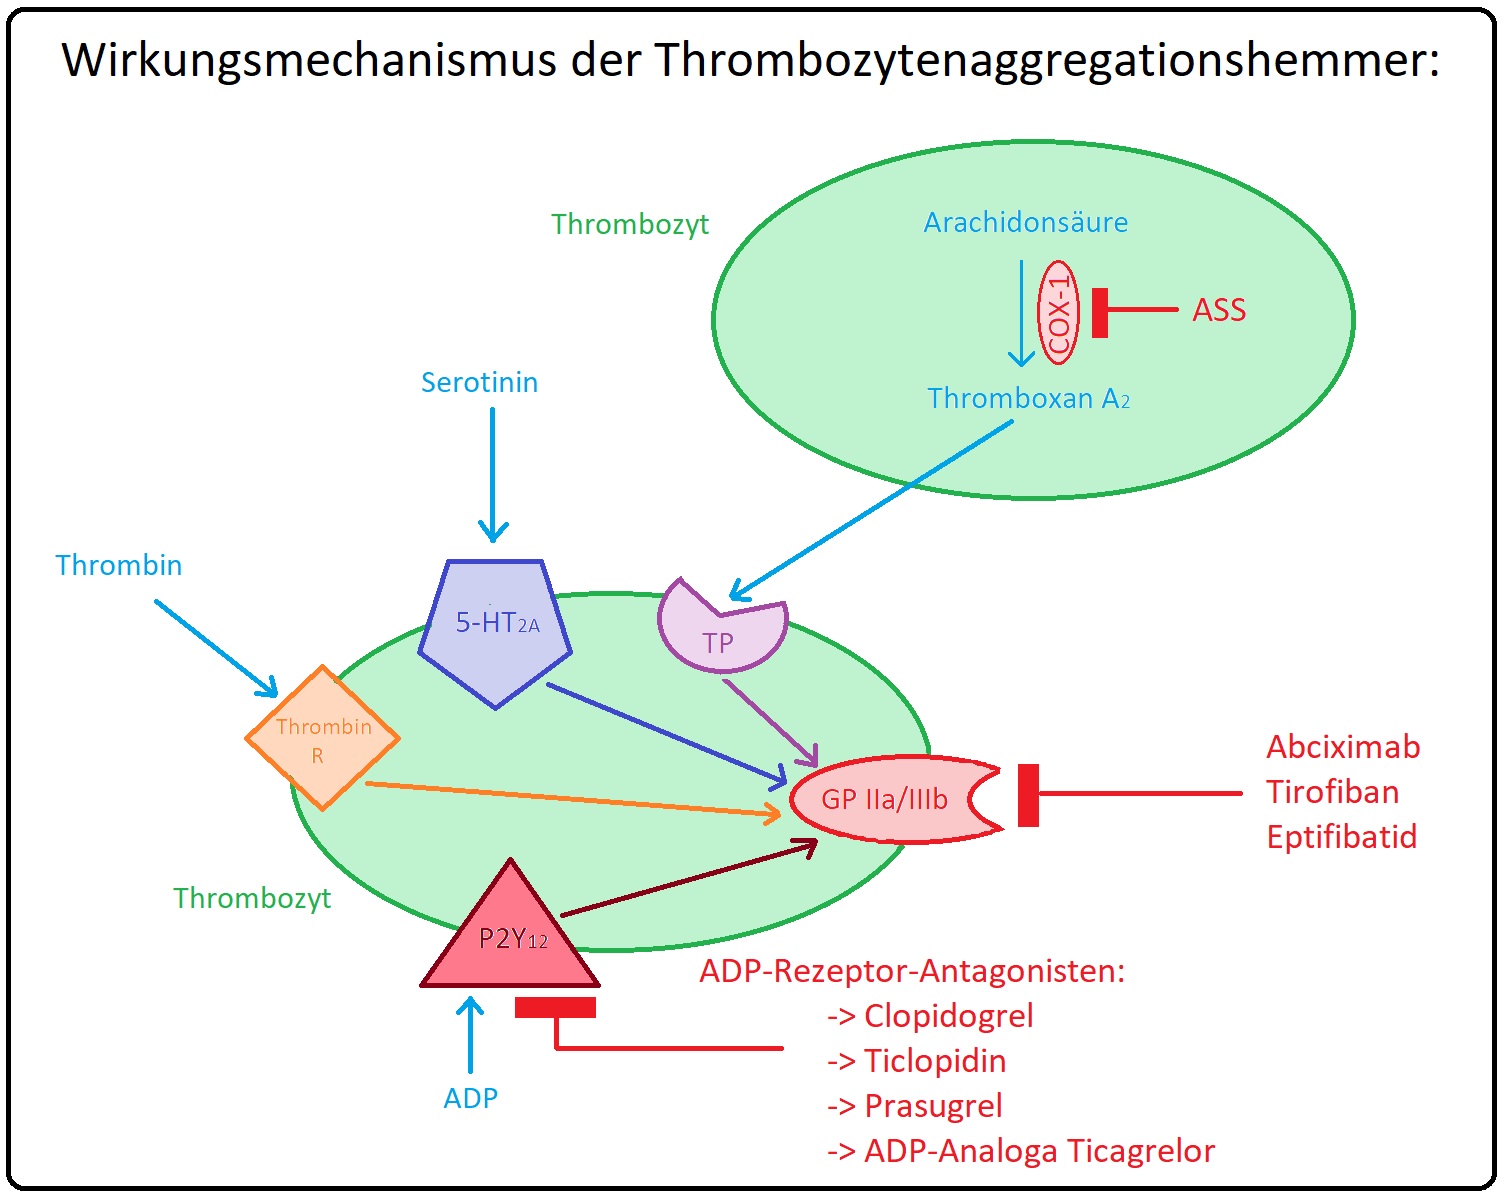 131 Wirkungsmechanismus der Thrombozytenaggregationshemmer